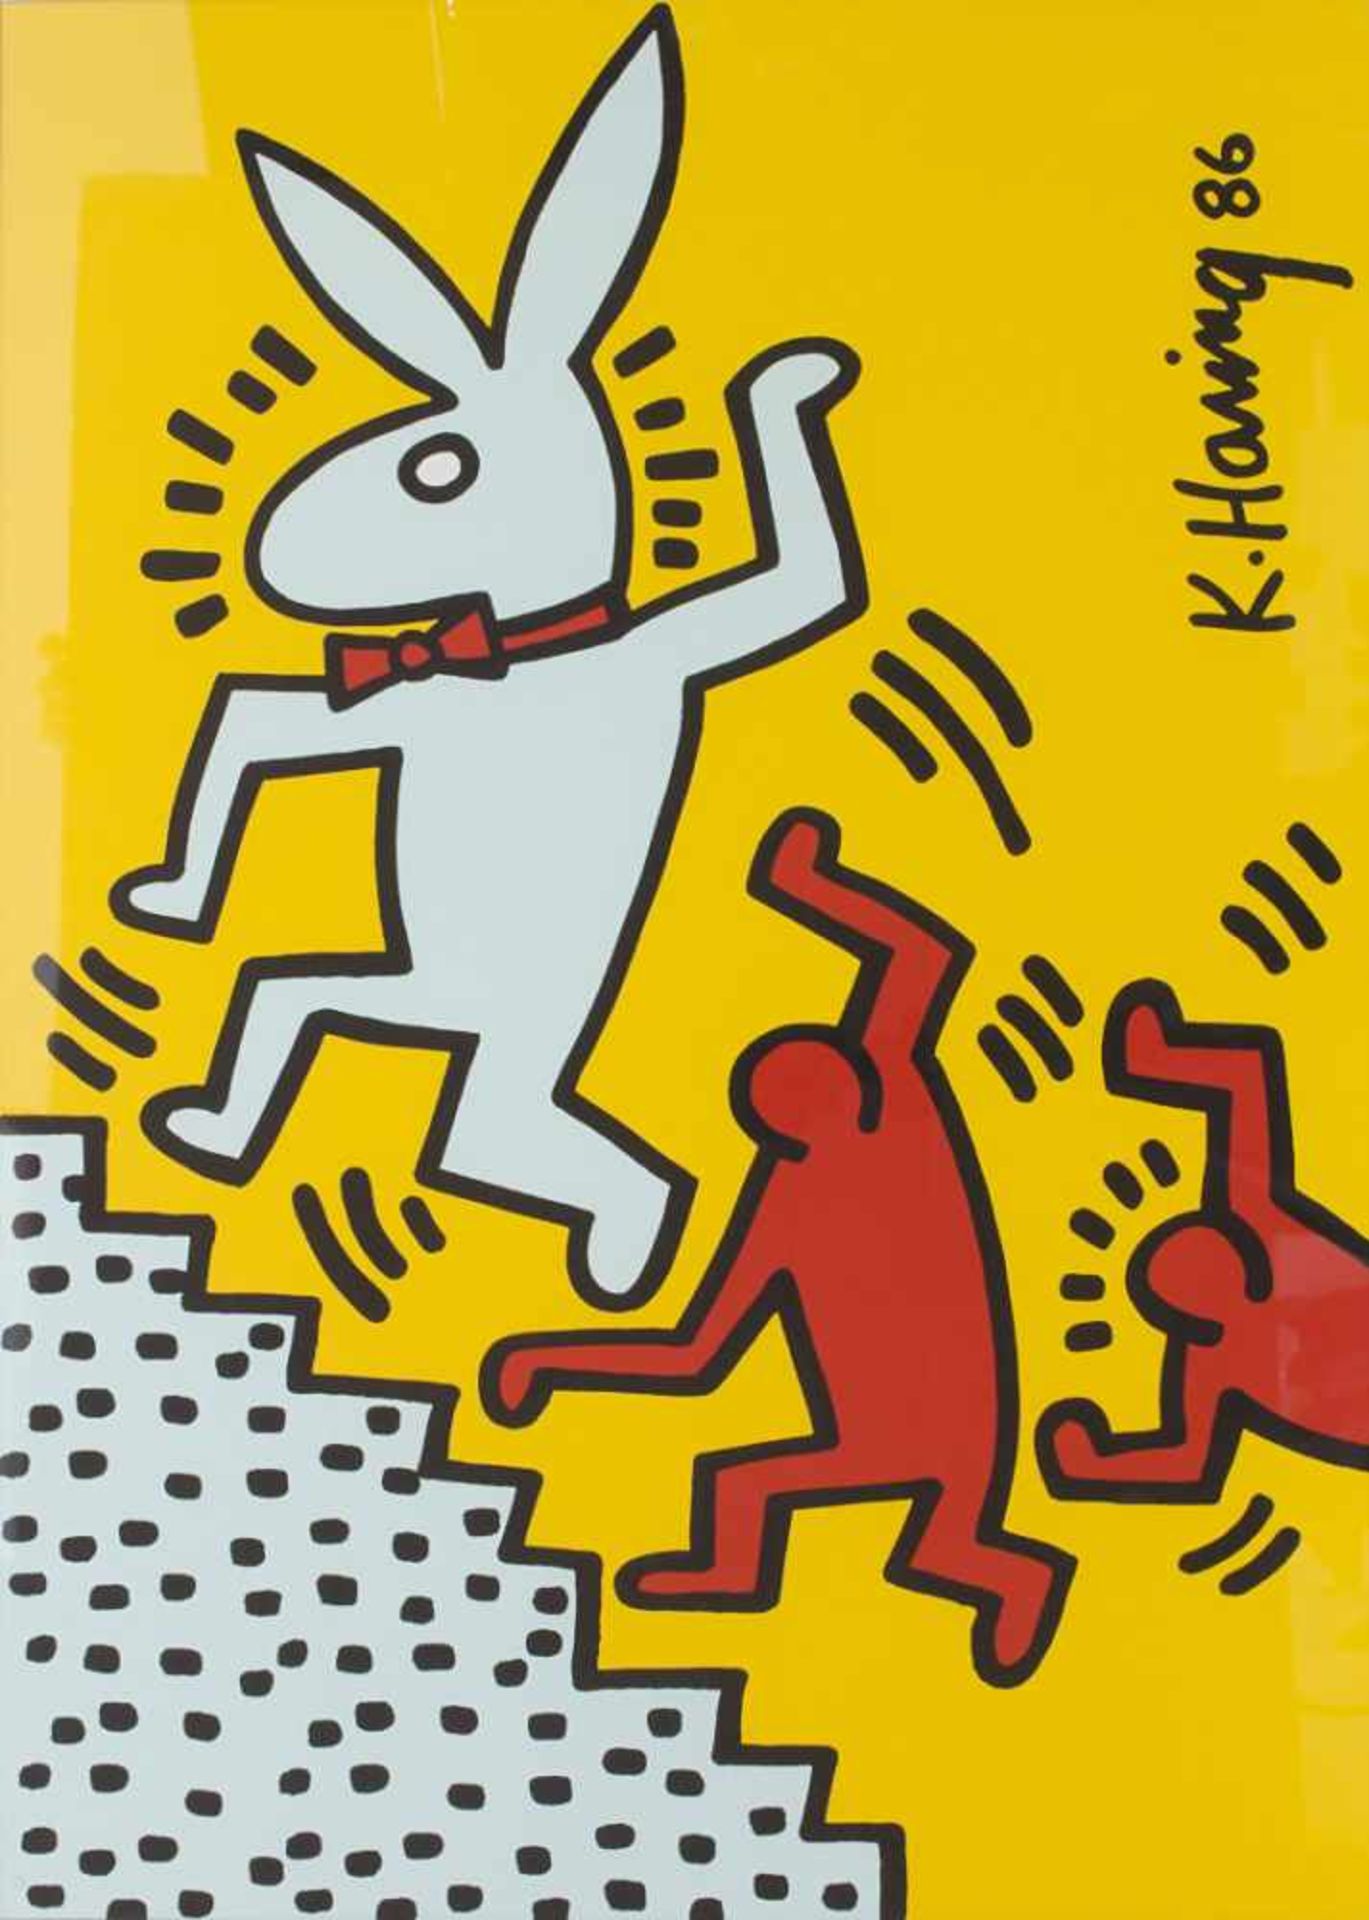 Keith Haring (1958-1990), 'Playboy' / 'Playboy'Technik: Serigrafie auf Papier, gerahmt, hinter